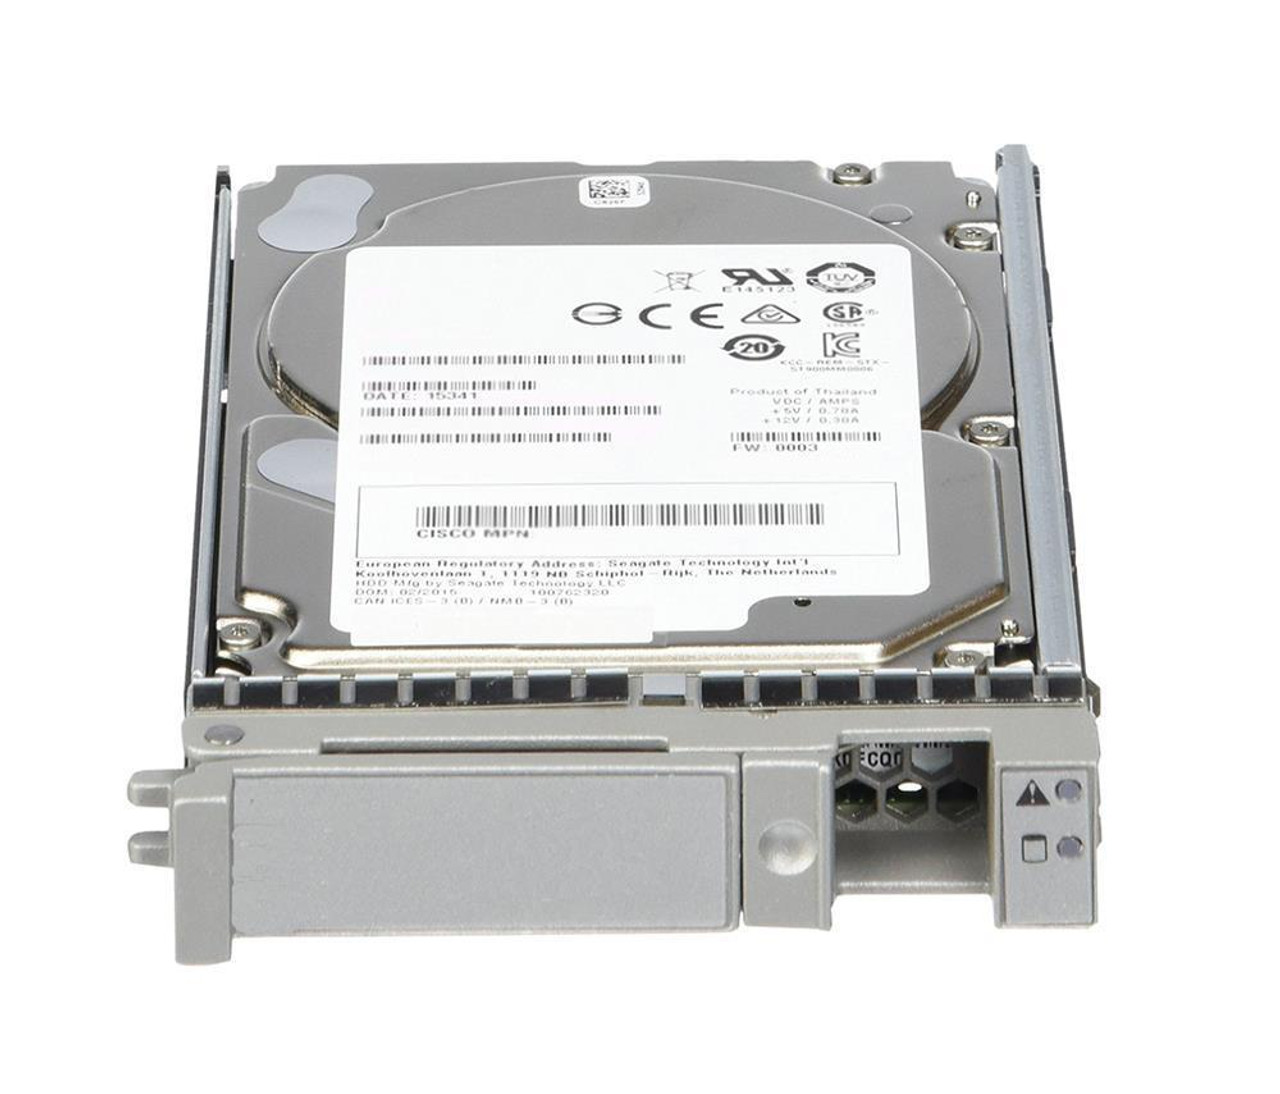 Cisco 12TB 7200RPM SAS 12Gbps (4K) 3.5-inch Internal Hard Drive